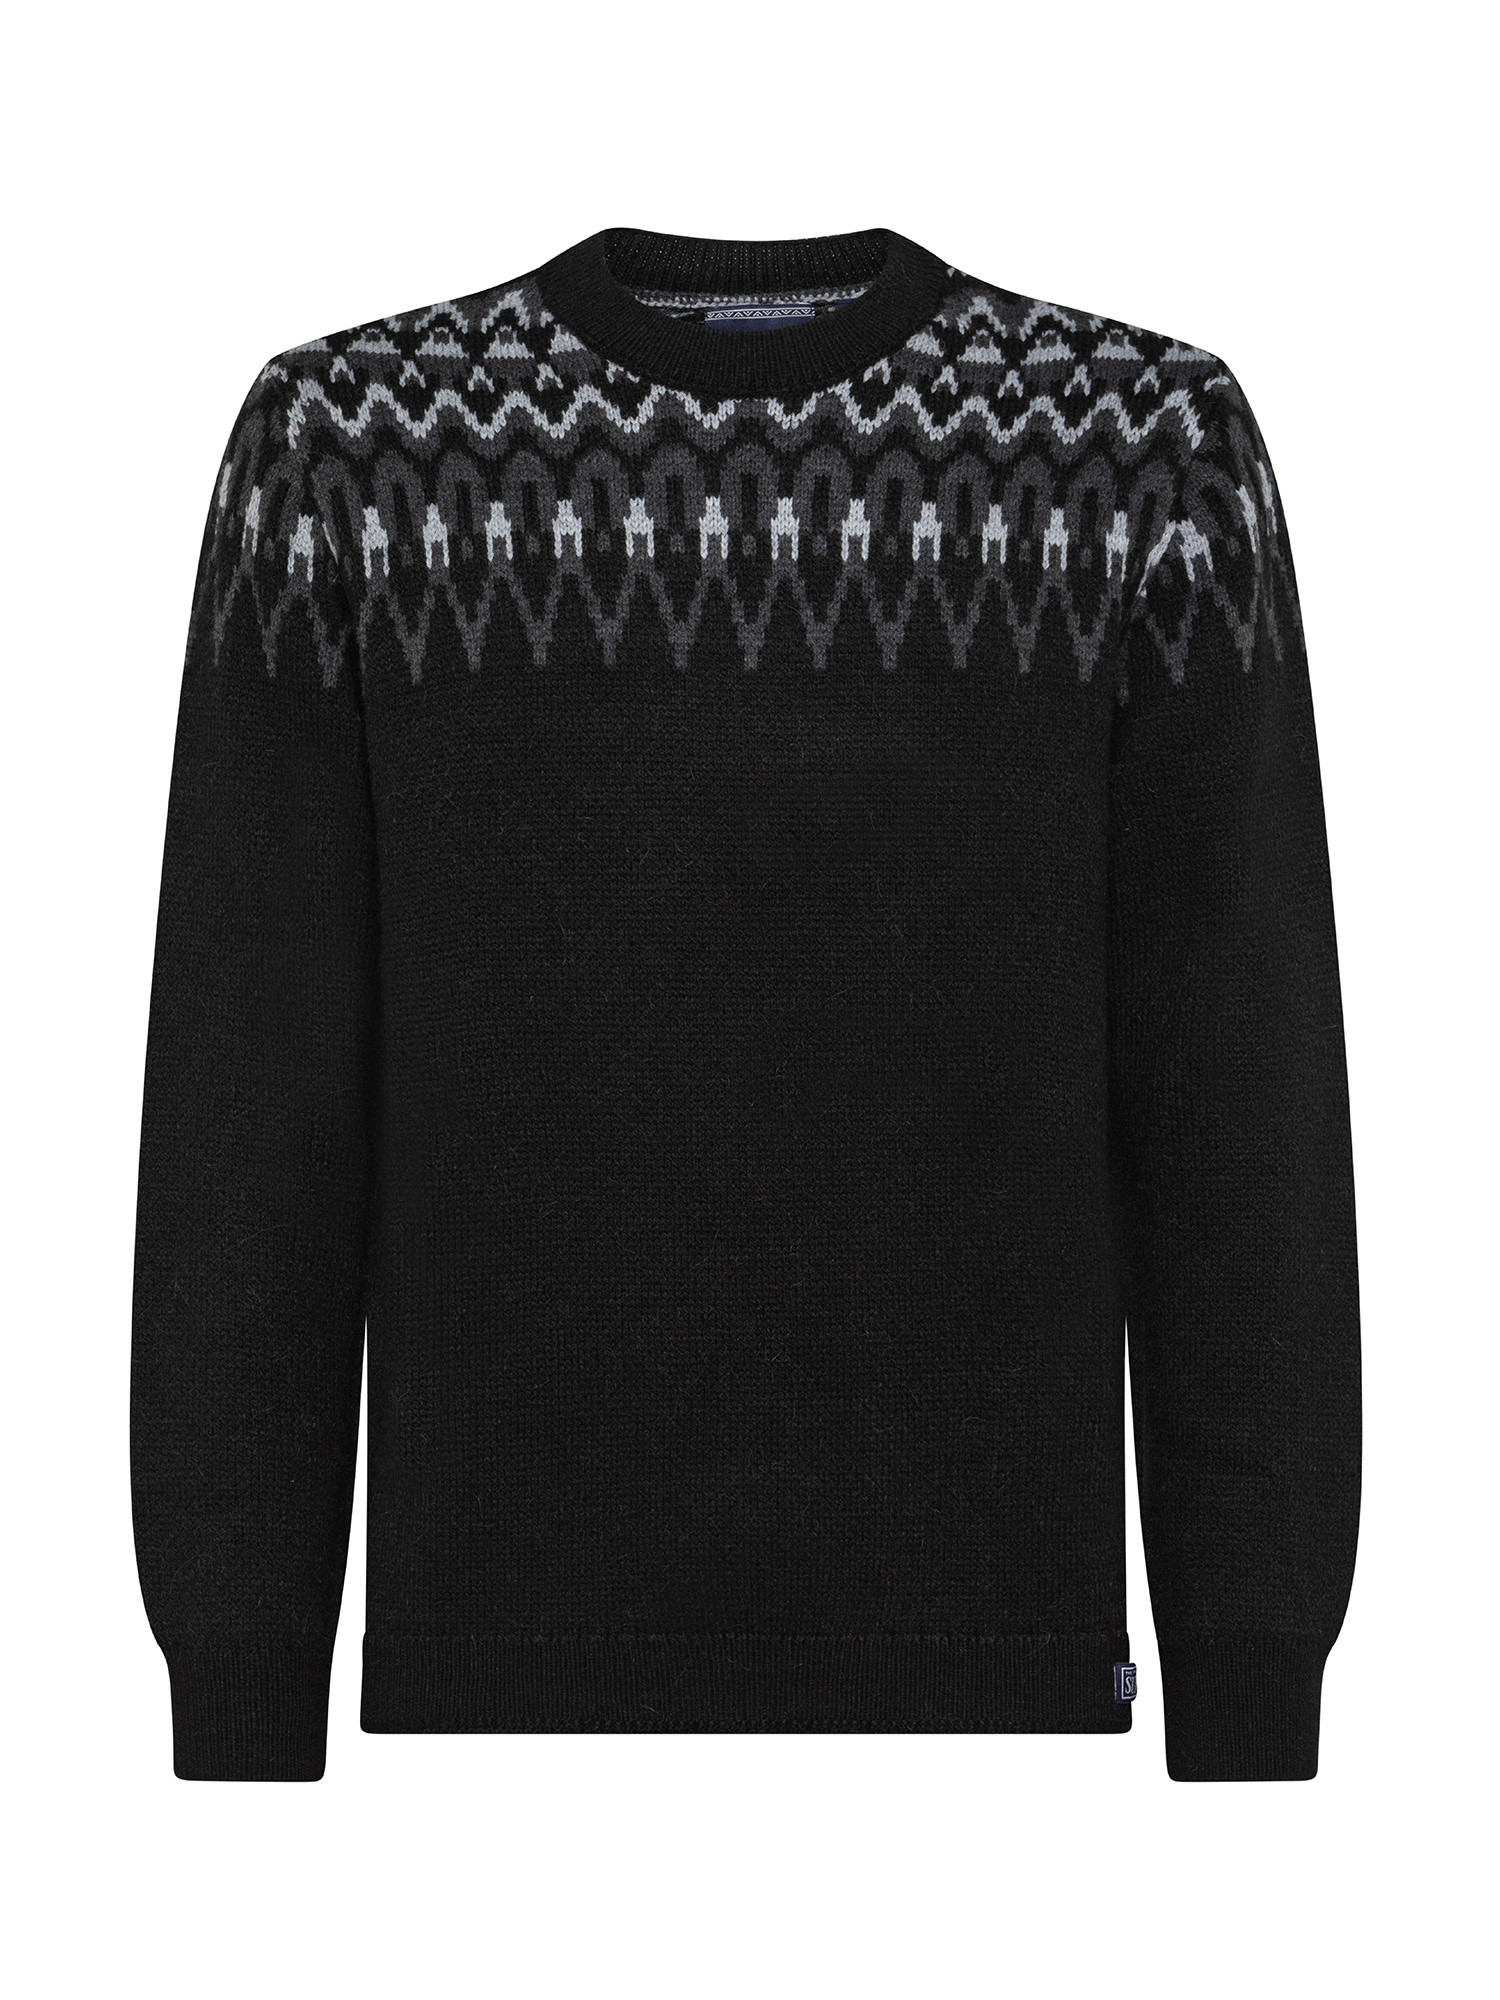 Superdry - Fair Isle crewneck sweater, Black, large image number 0